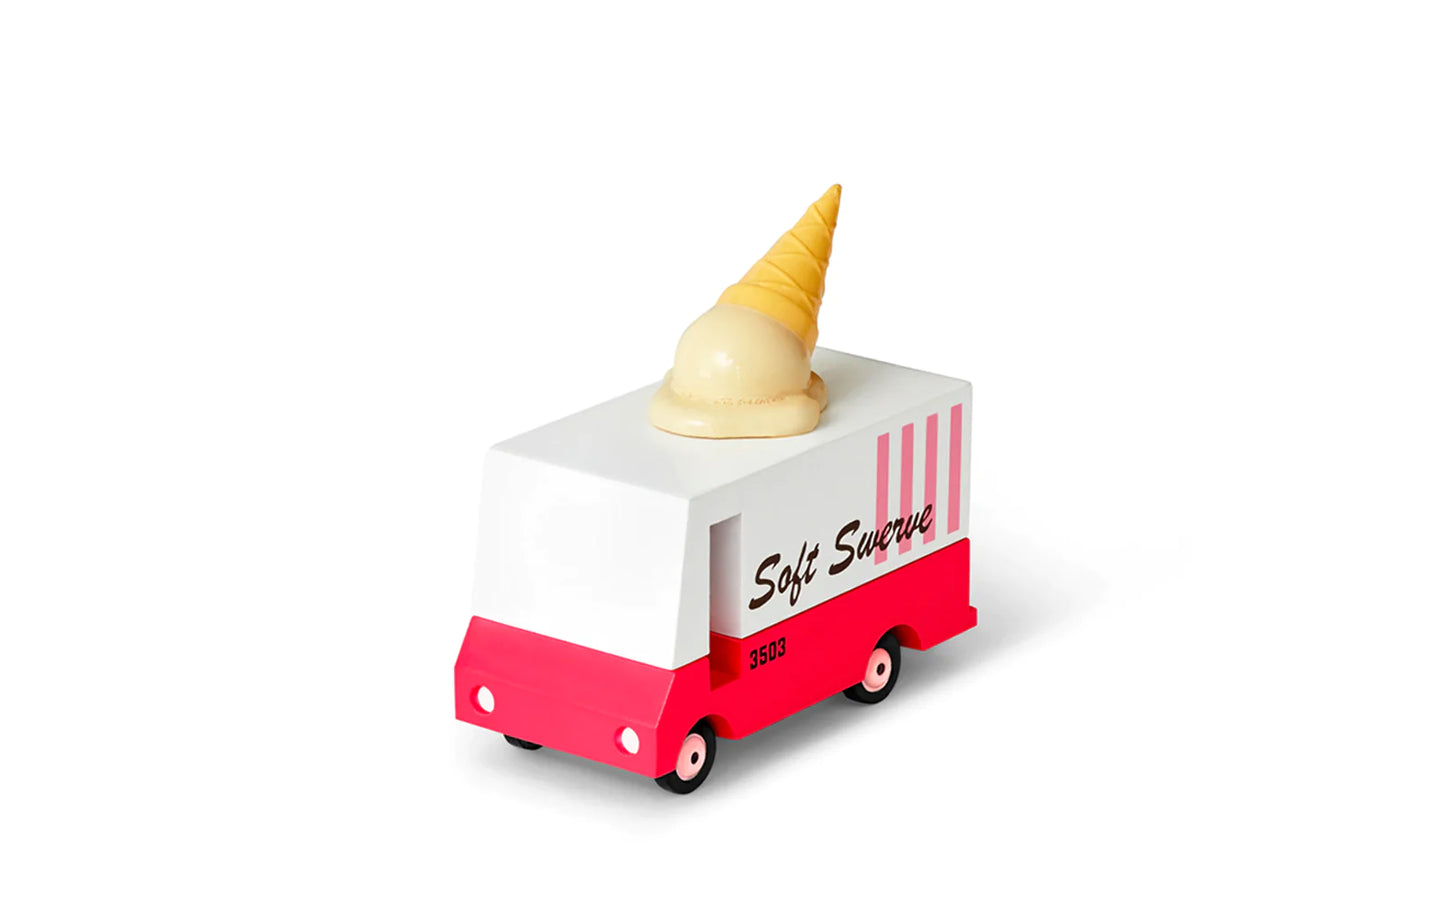 Soft Swerve Van